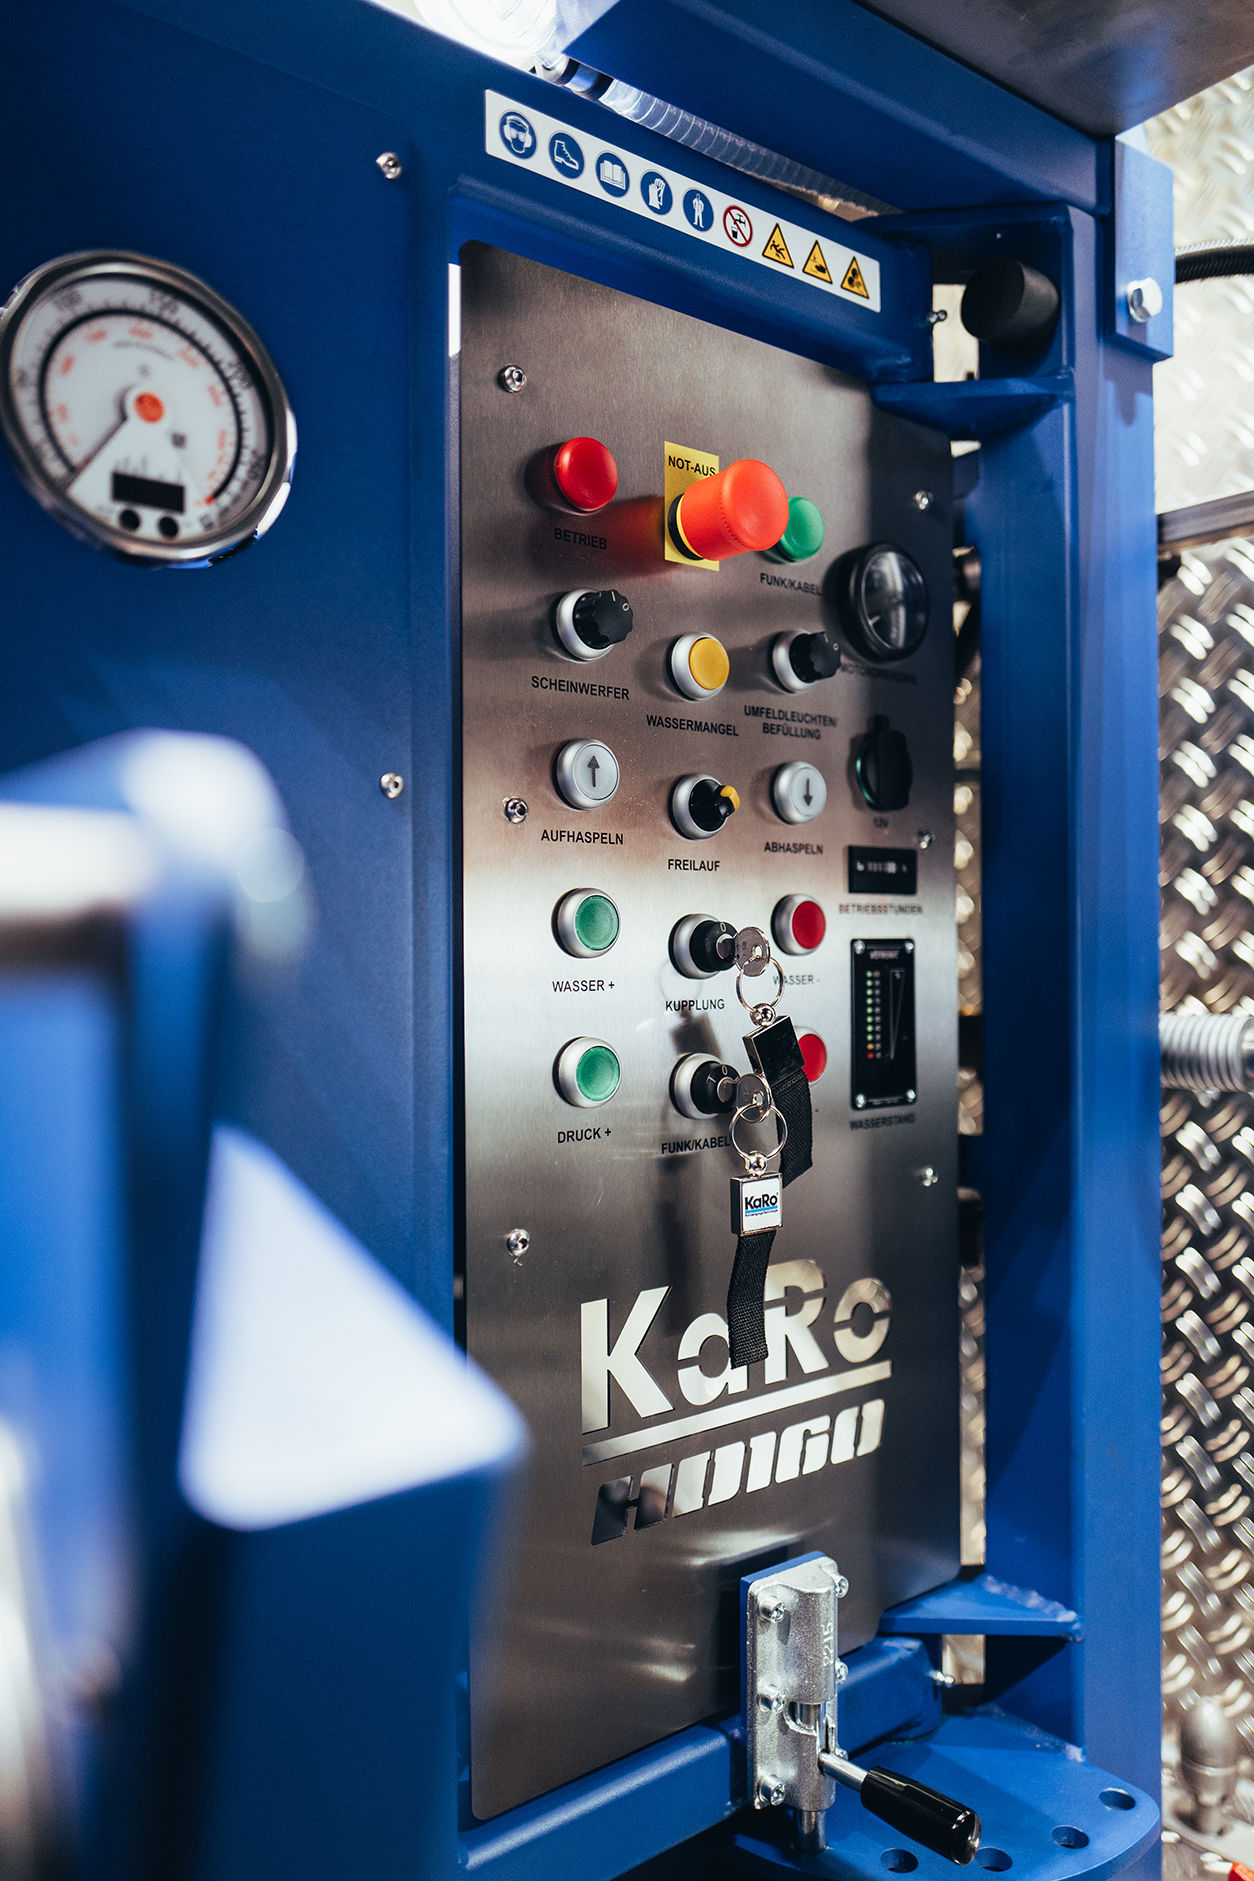 HD160 Hochdruckspülgerät Bedienfeld | KaRo